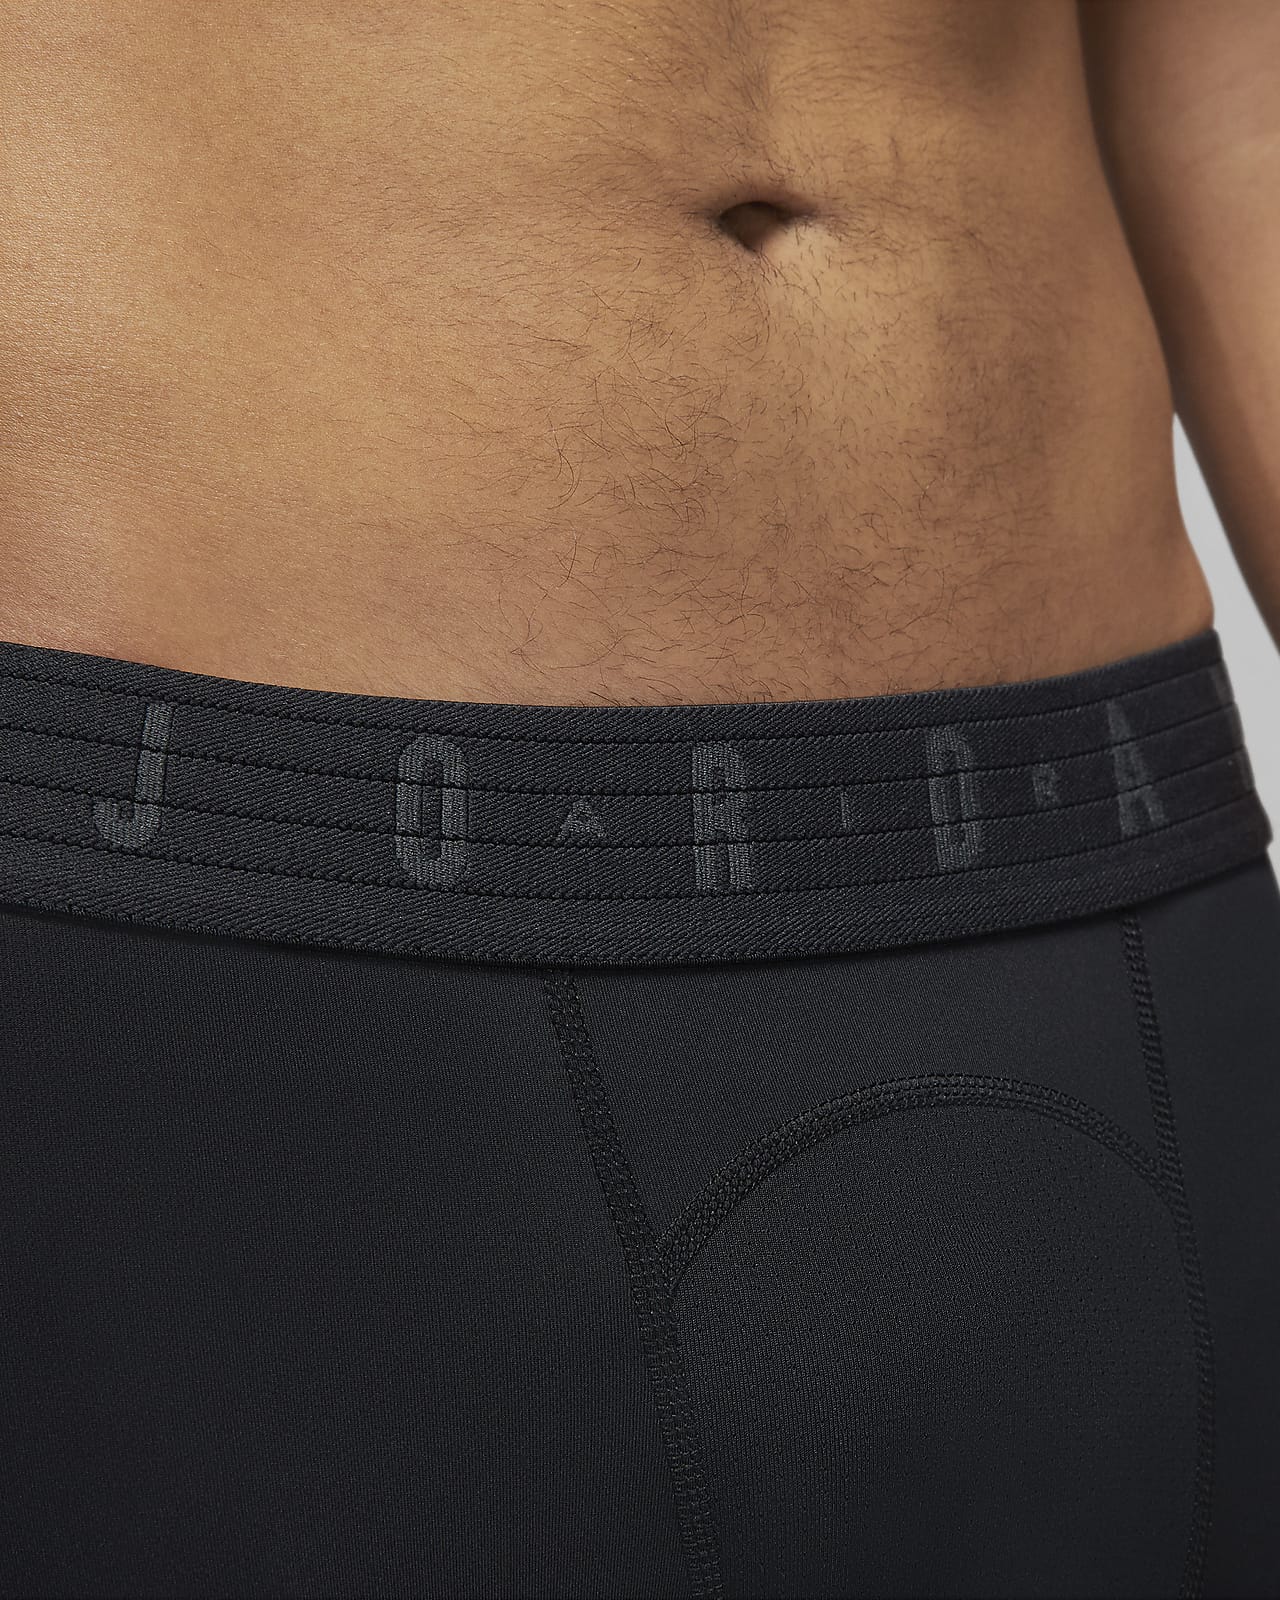  Jordan Boys' AJ Stay Cool Compression Graphic 3/4 Tights  (Black, Medium) : Clothing, Shoes & Jewelry